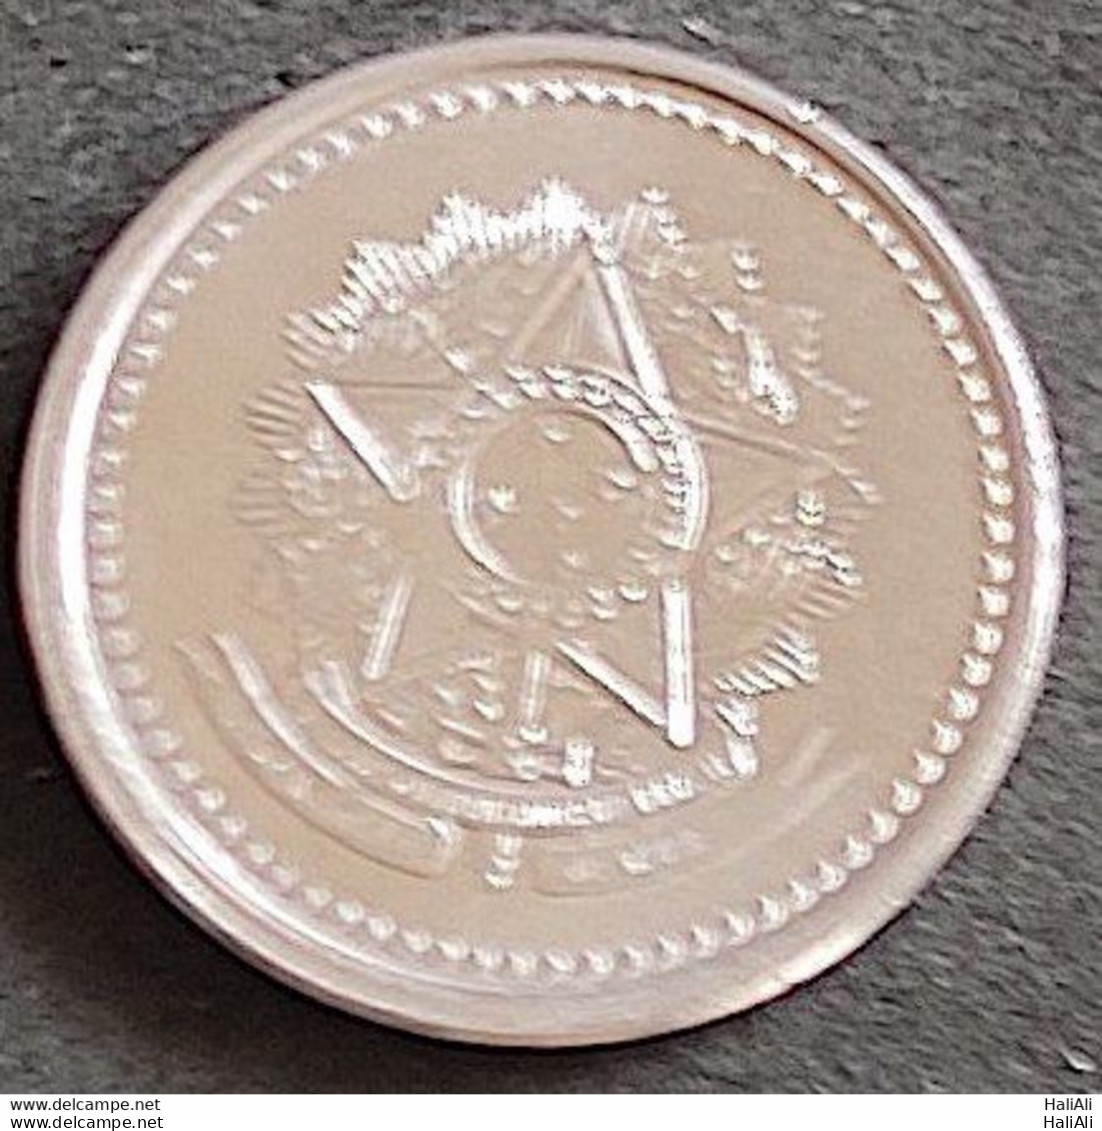 Brazil Coin 1986 100 Centavos 1 - Brazil